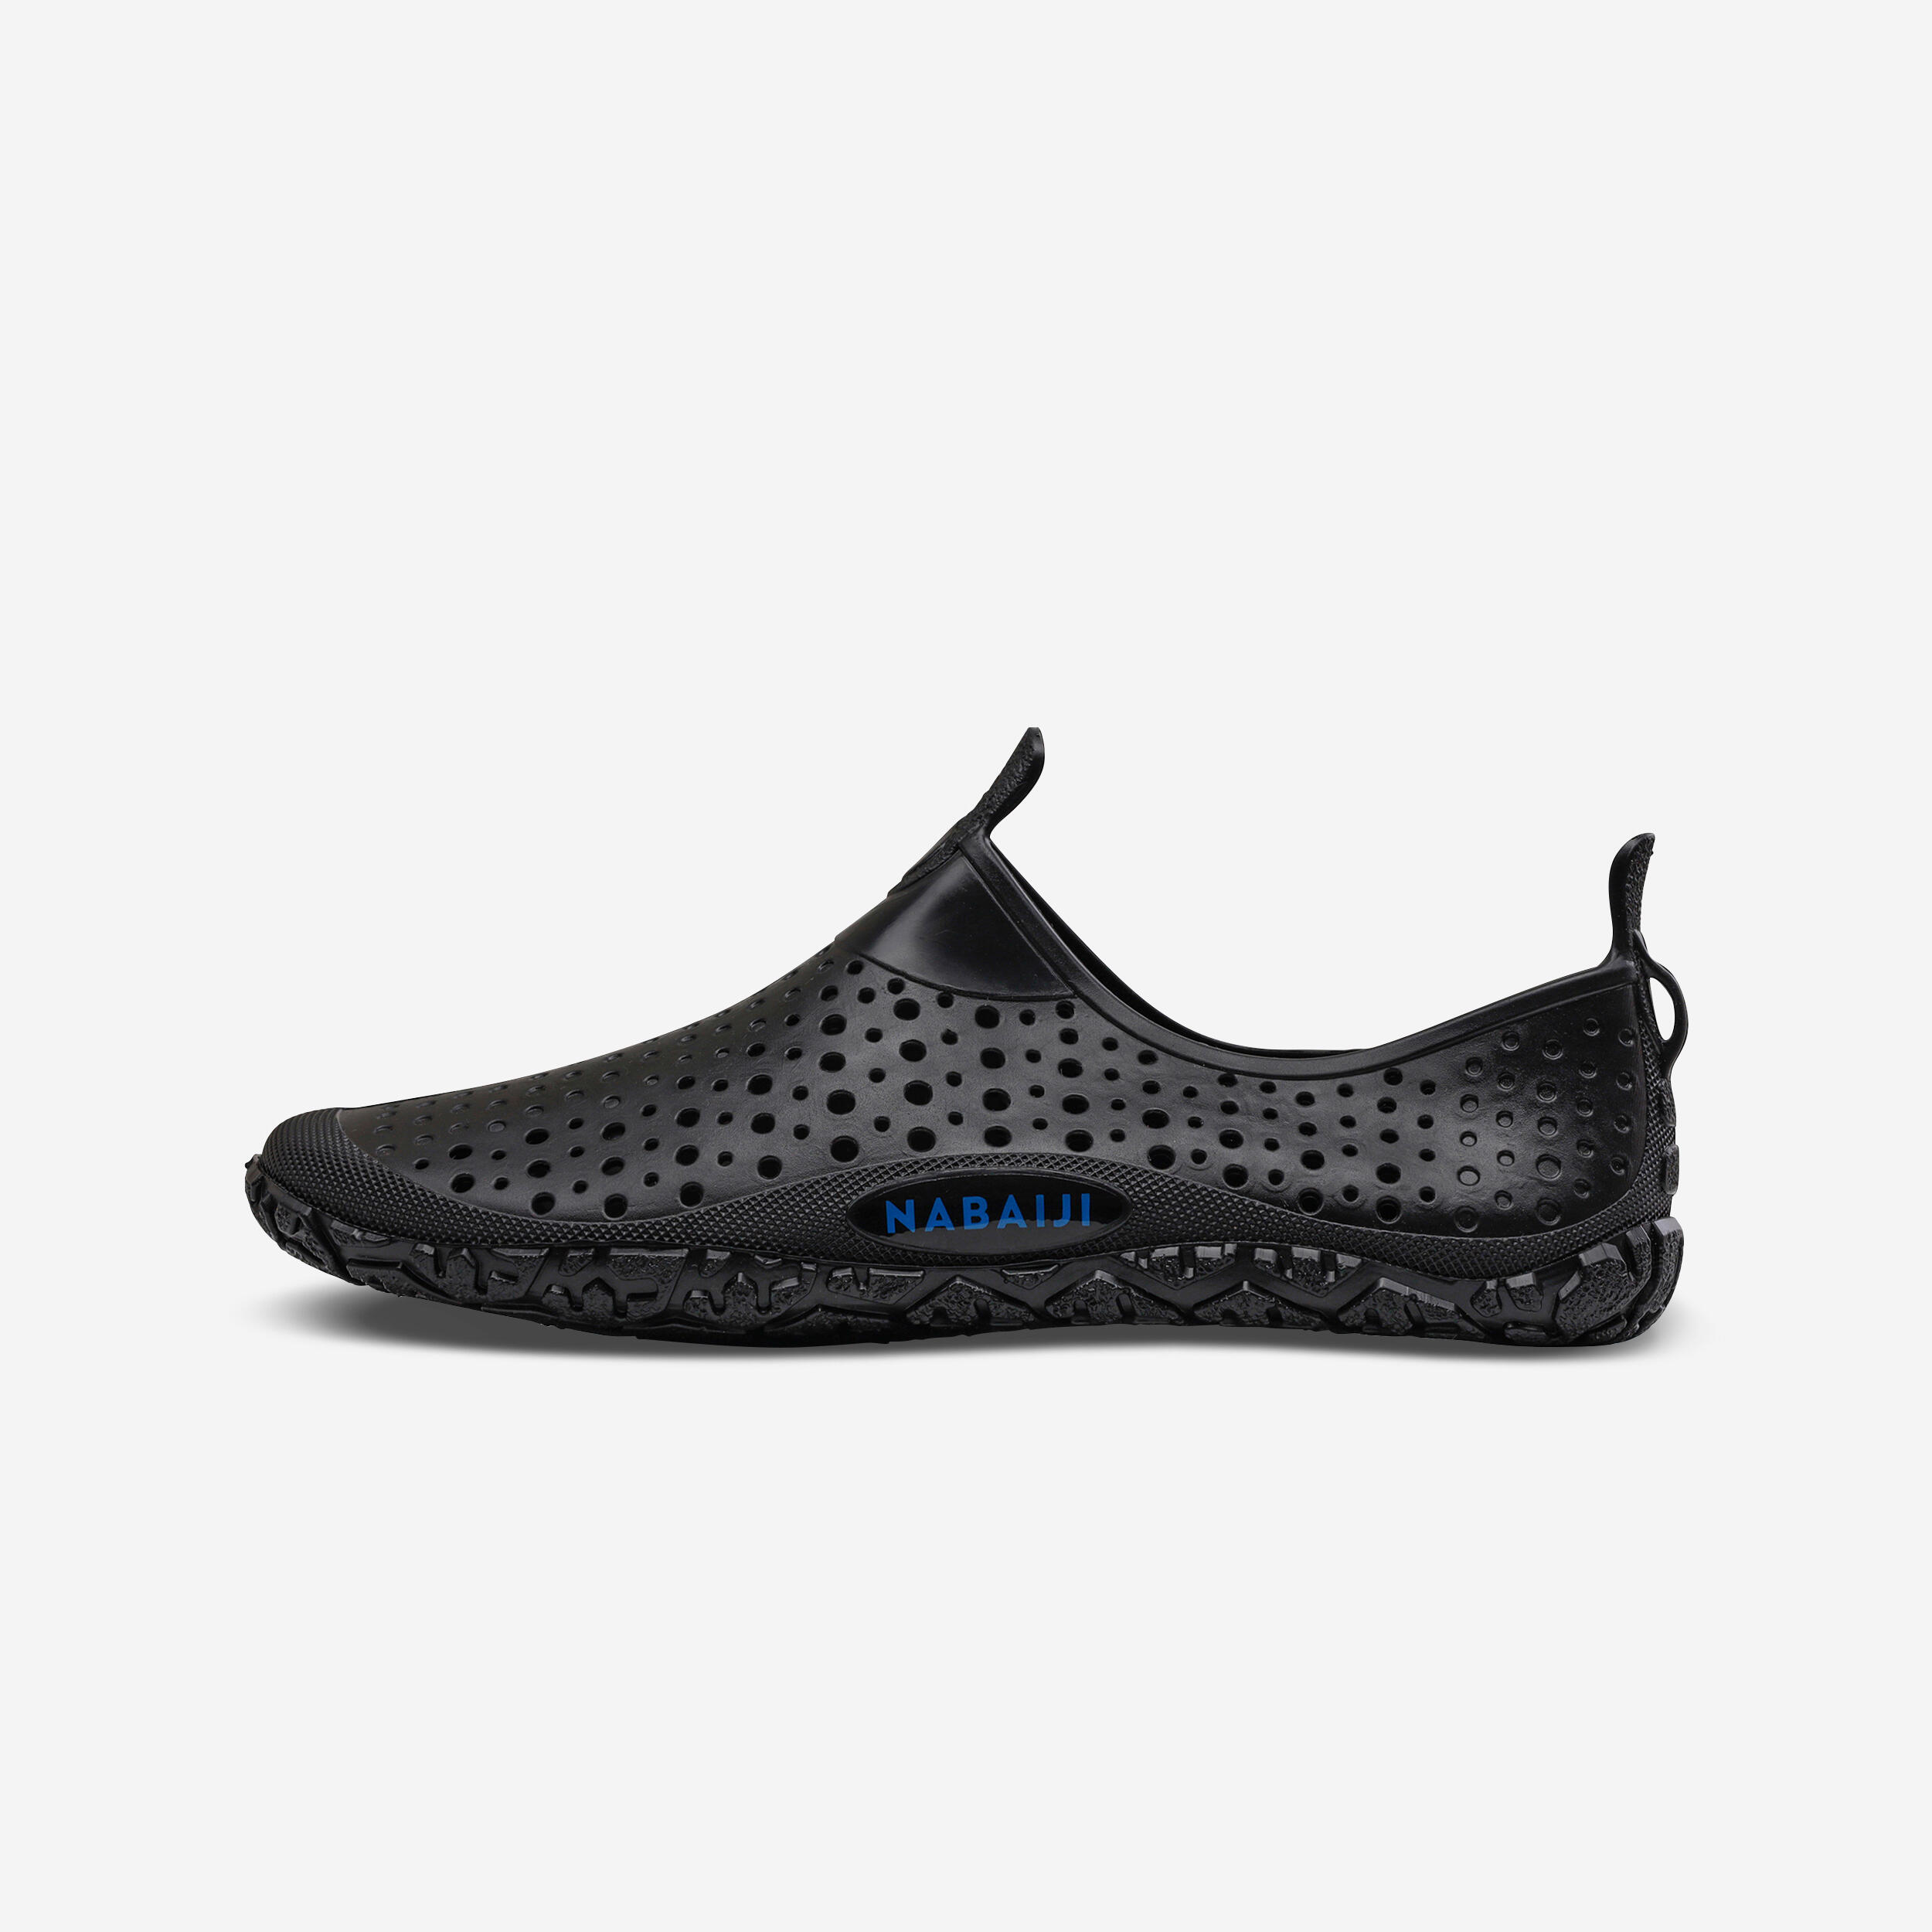 Image of Aquafitness Water Shoes - Aquadots Black